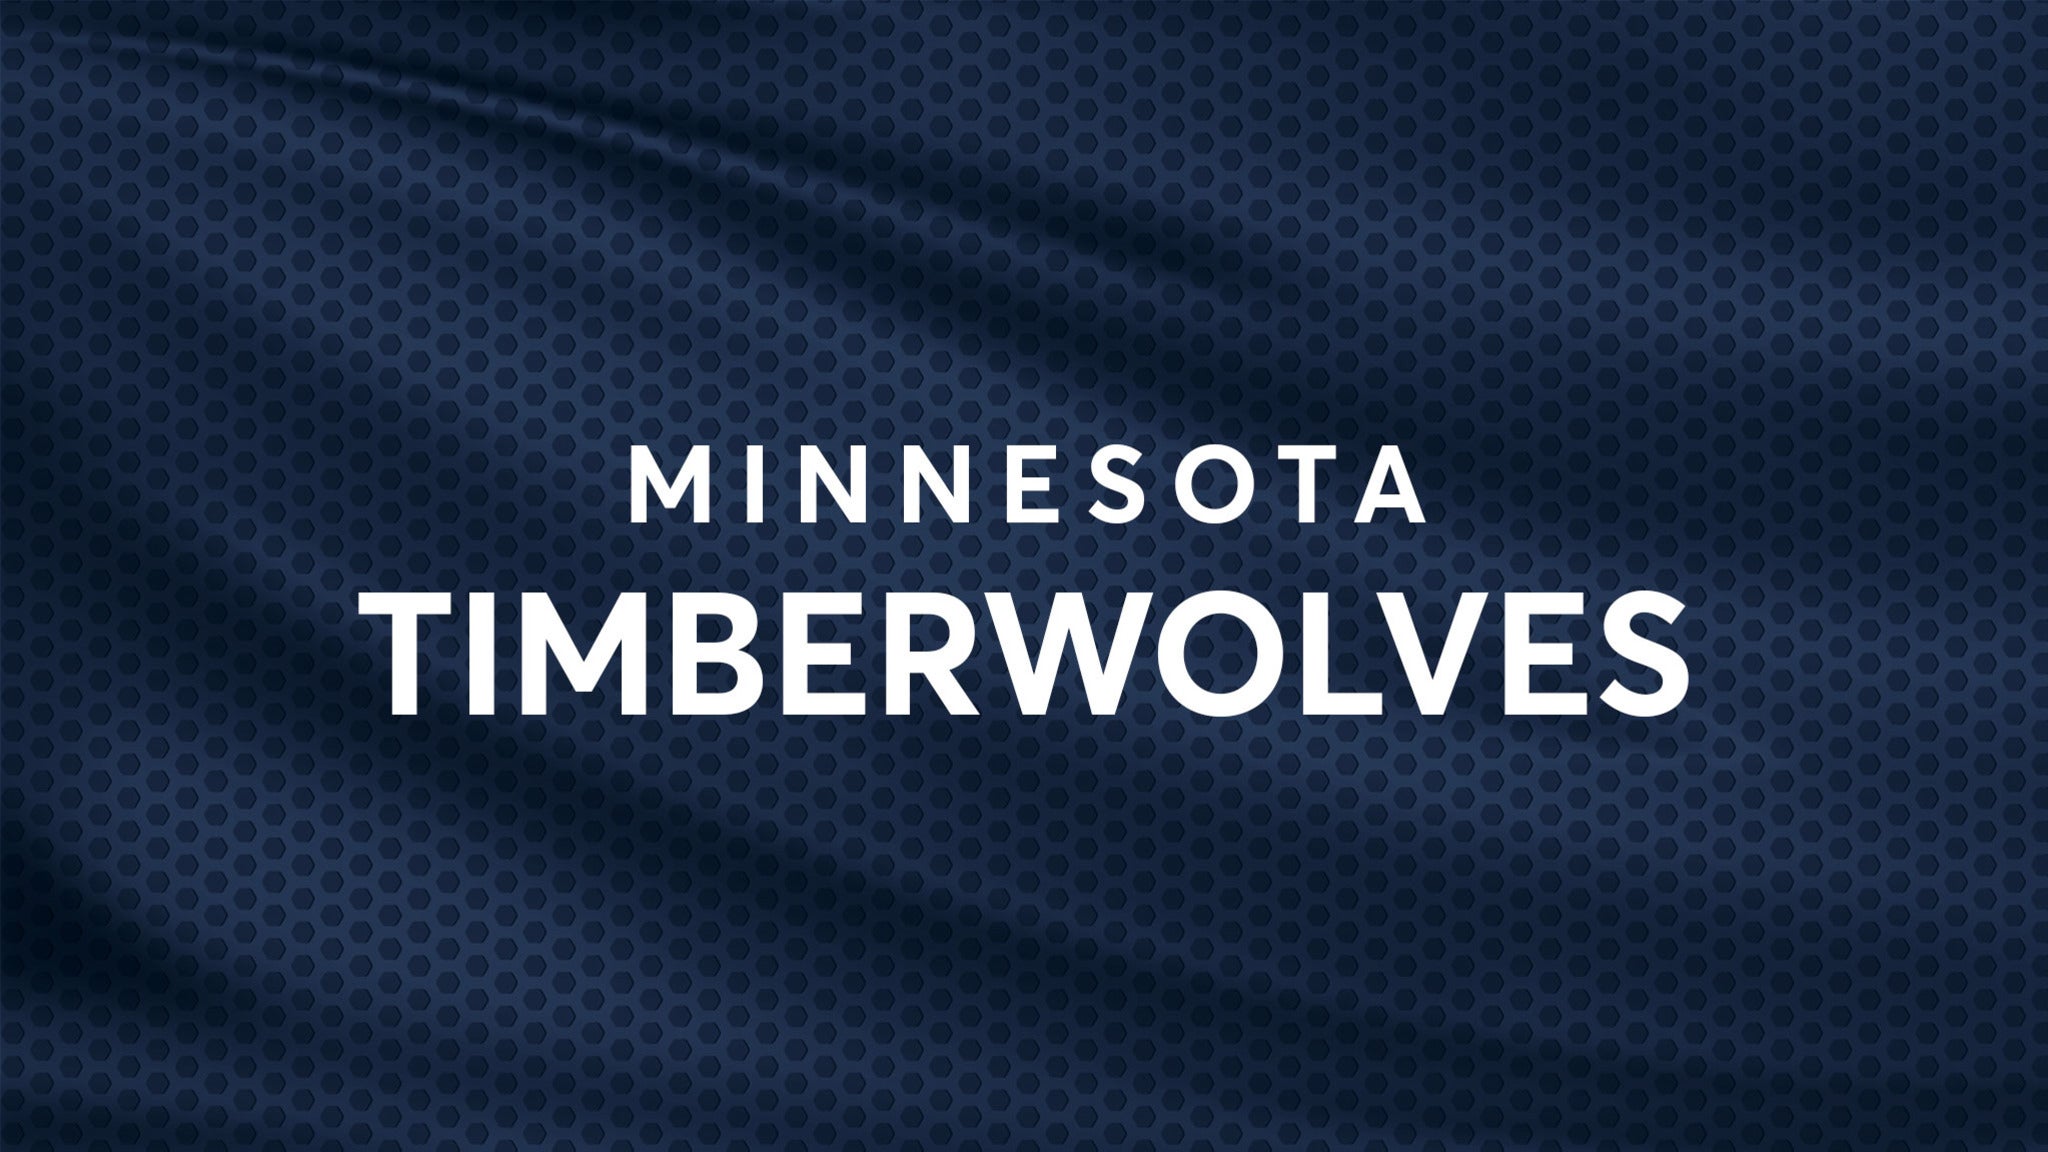 Minnesota Timberwolves vs. Oklahoma City Thunder - Minneapolis, MN 55403